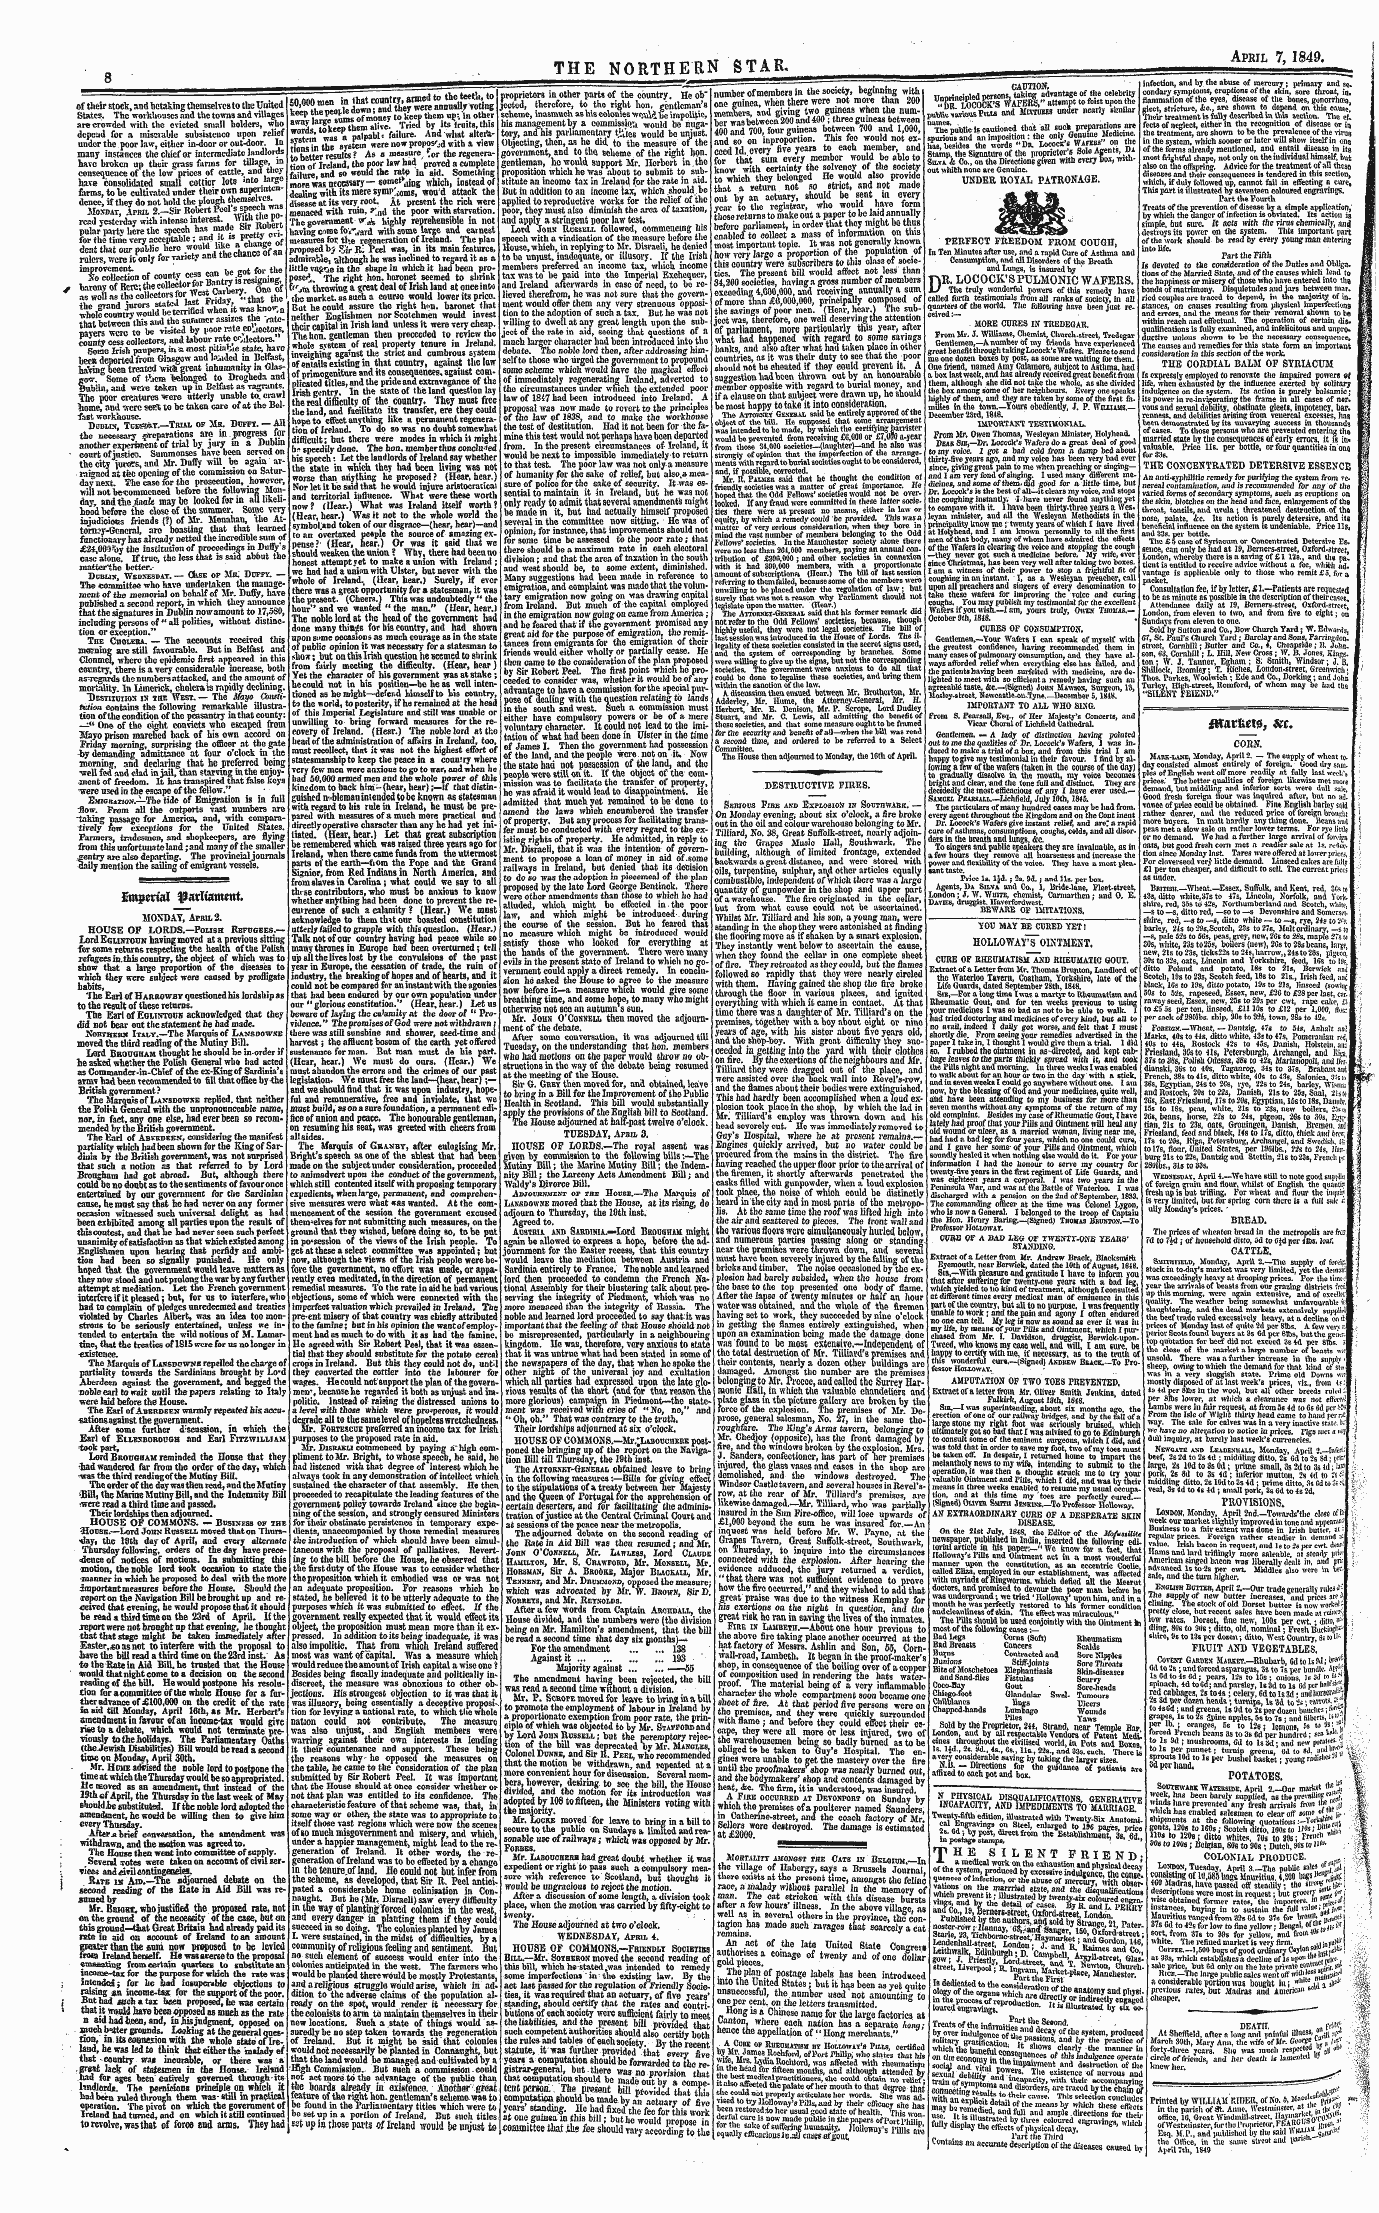 Northern Star (1837-1852): jS F Y, 3rd edition - Smgerfal $Arlwmwttt